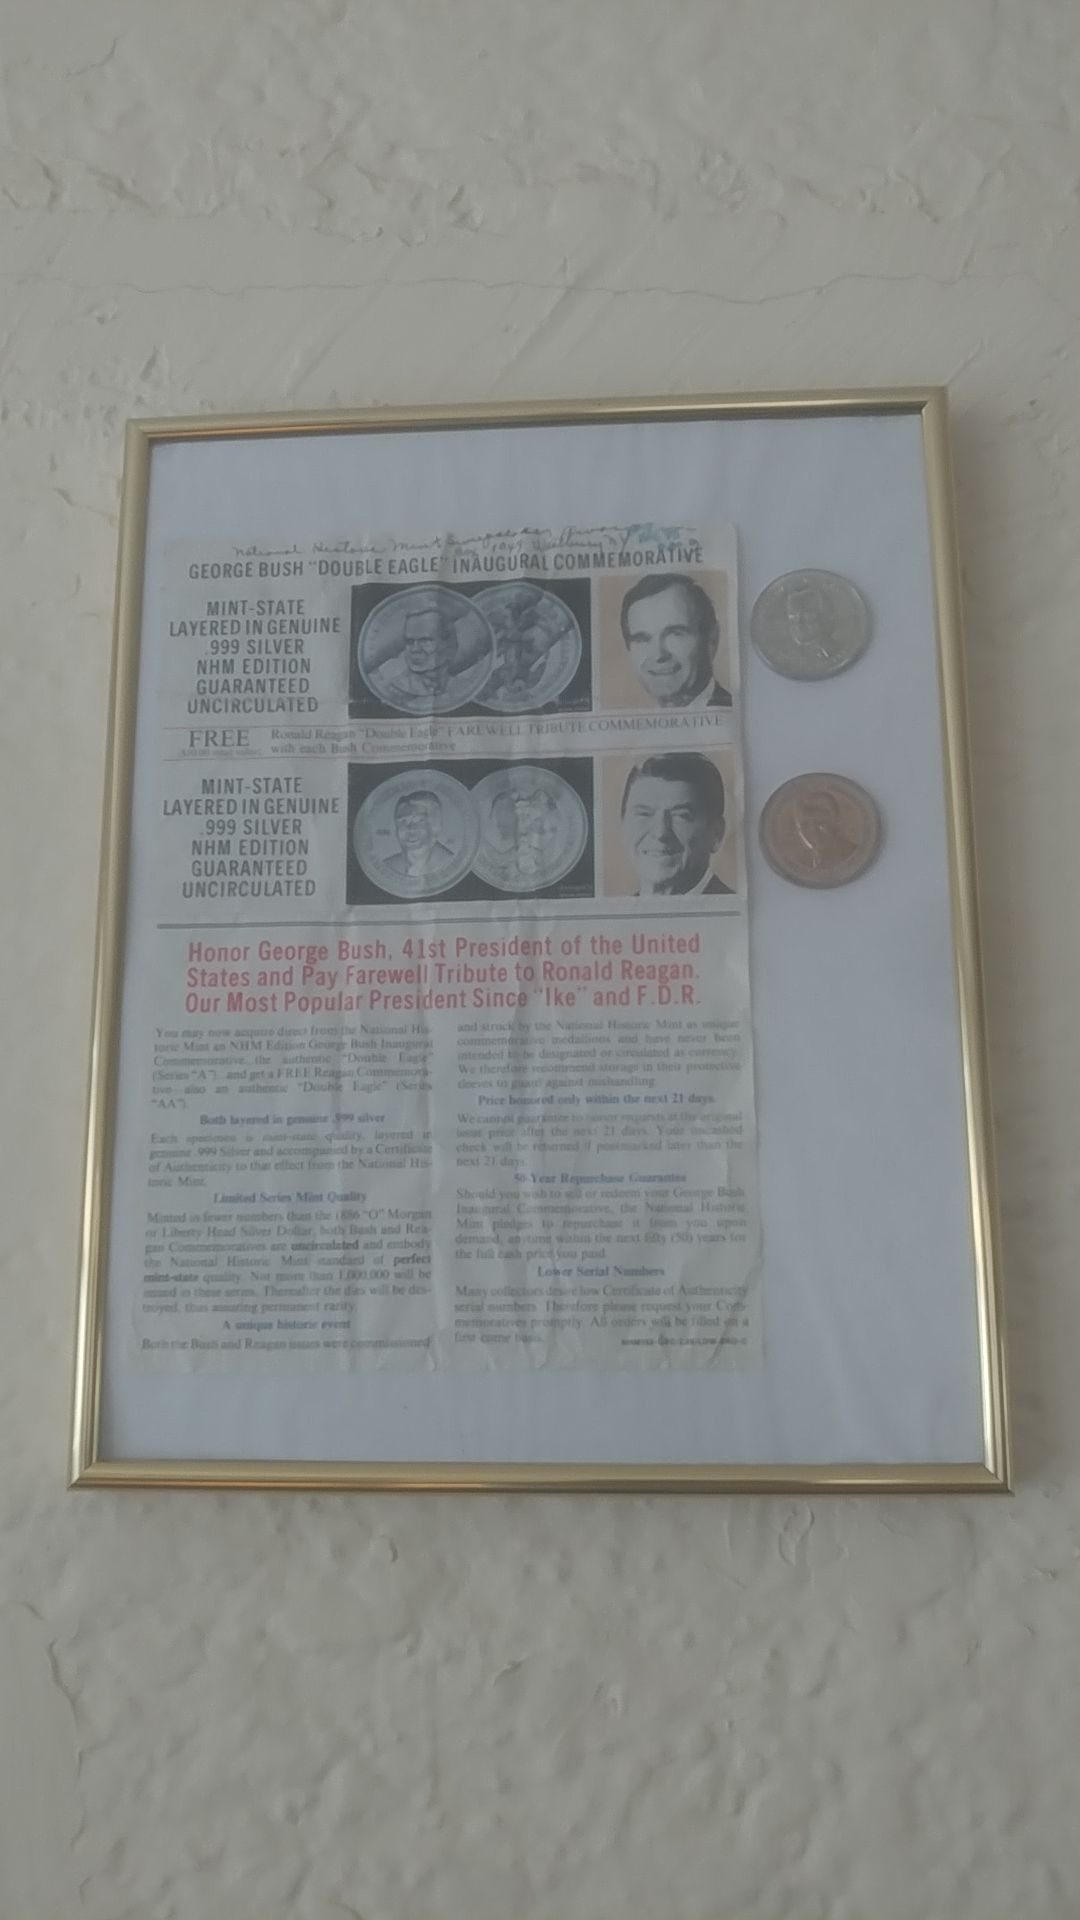 Silver Double Eagle inaugural commemorative coin uncirculated 1988 Bush and 1984 Reagan